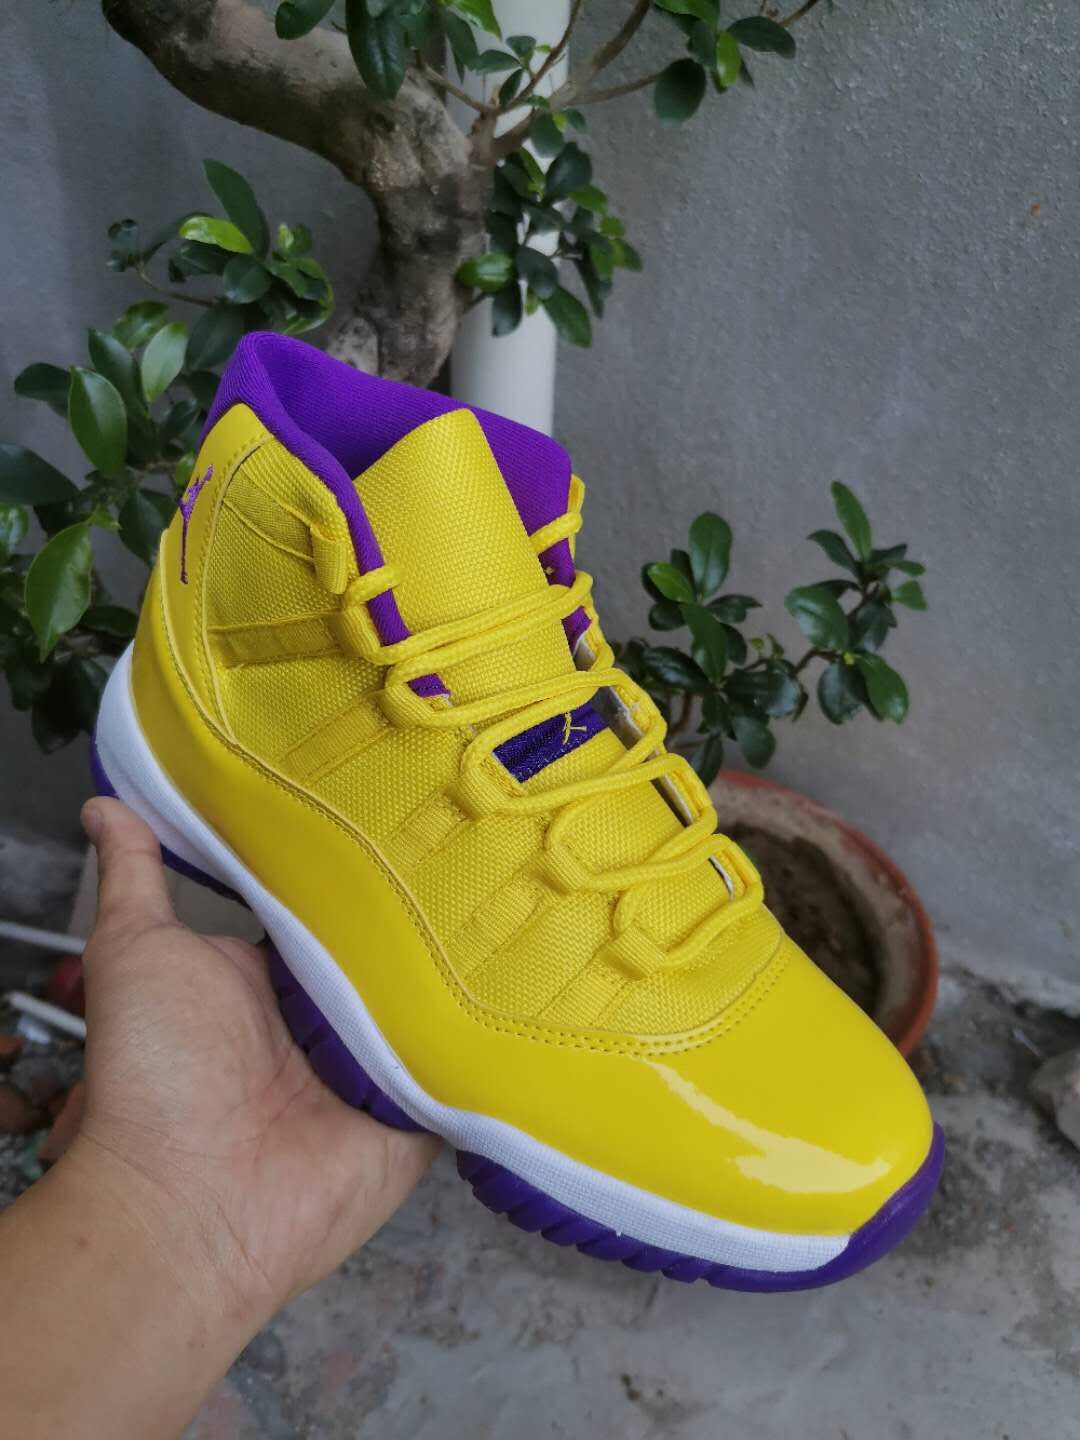 jordan 11 yellow and purple